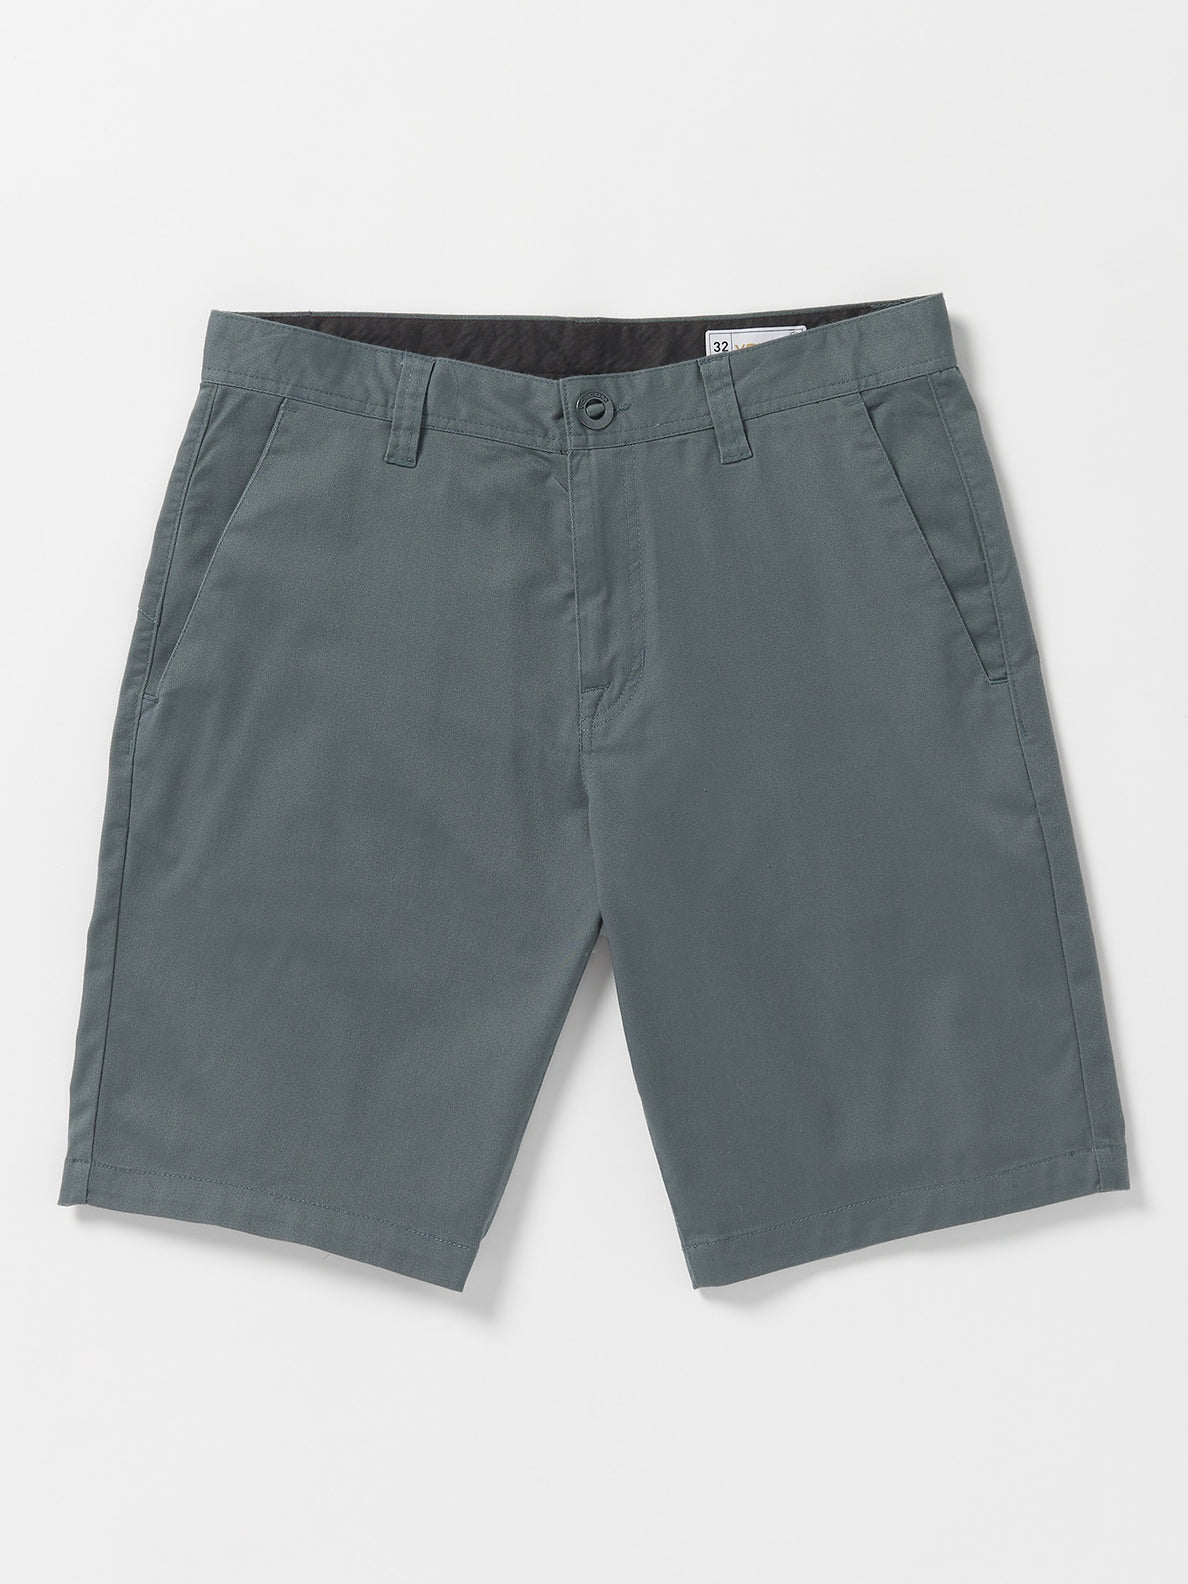 Frickin Modern Stretch Chino Shorts - Dark Slate